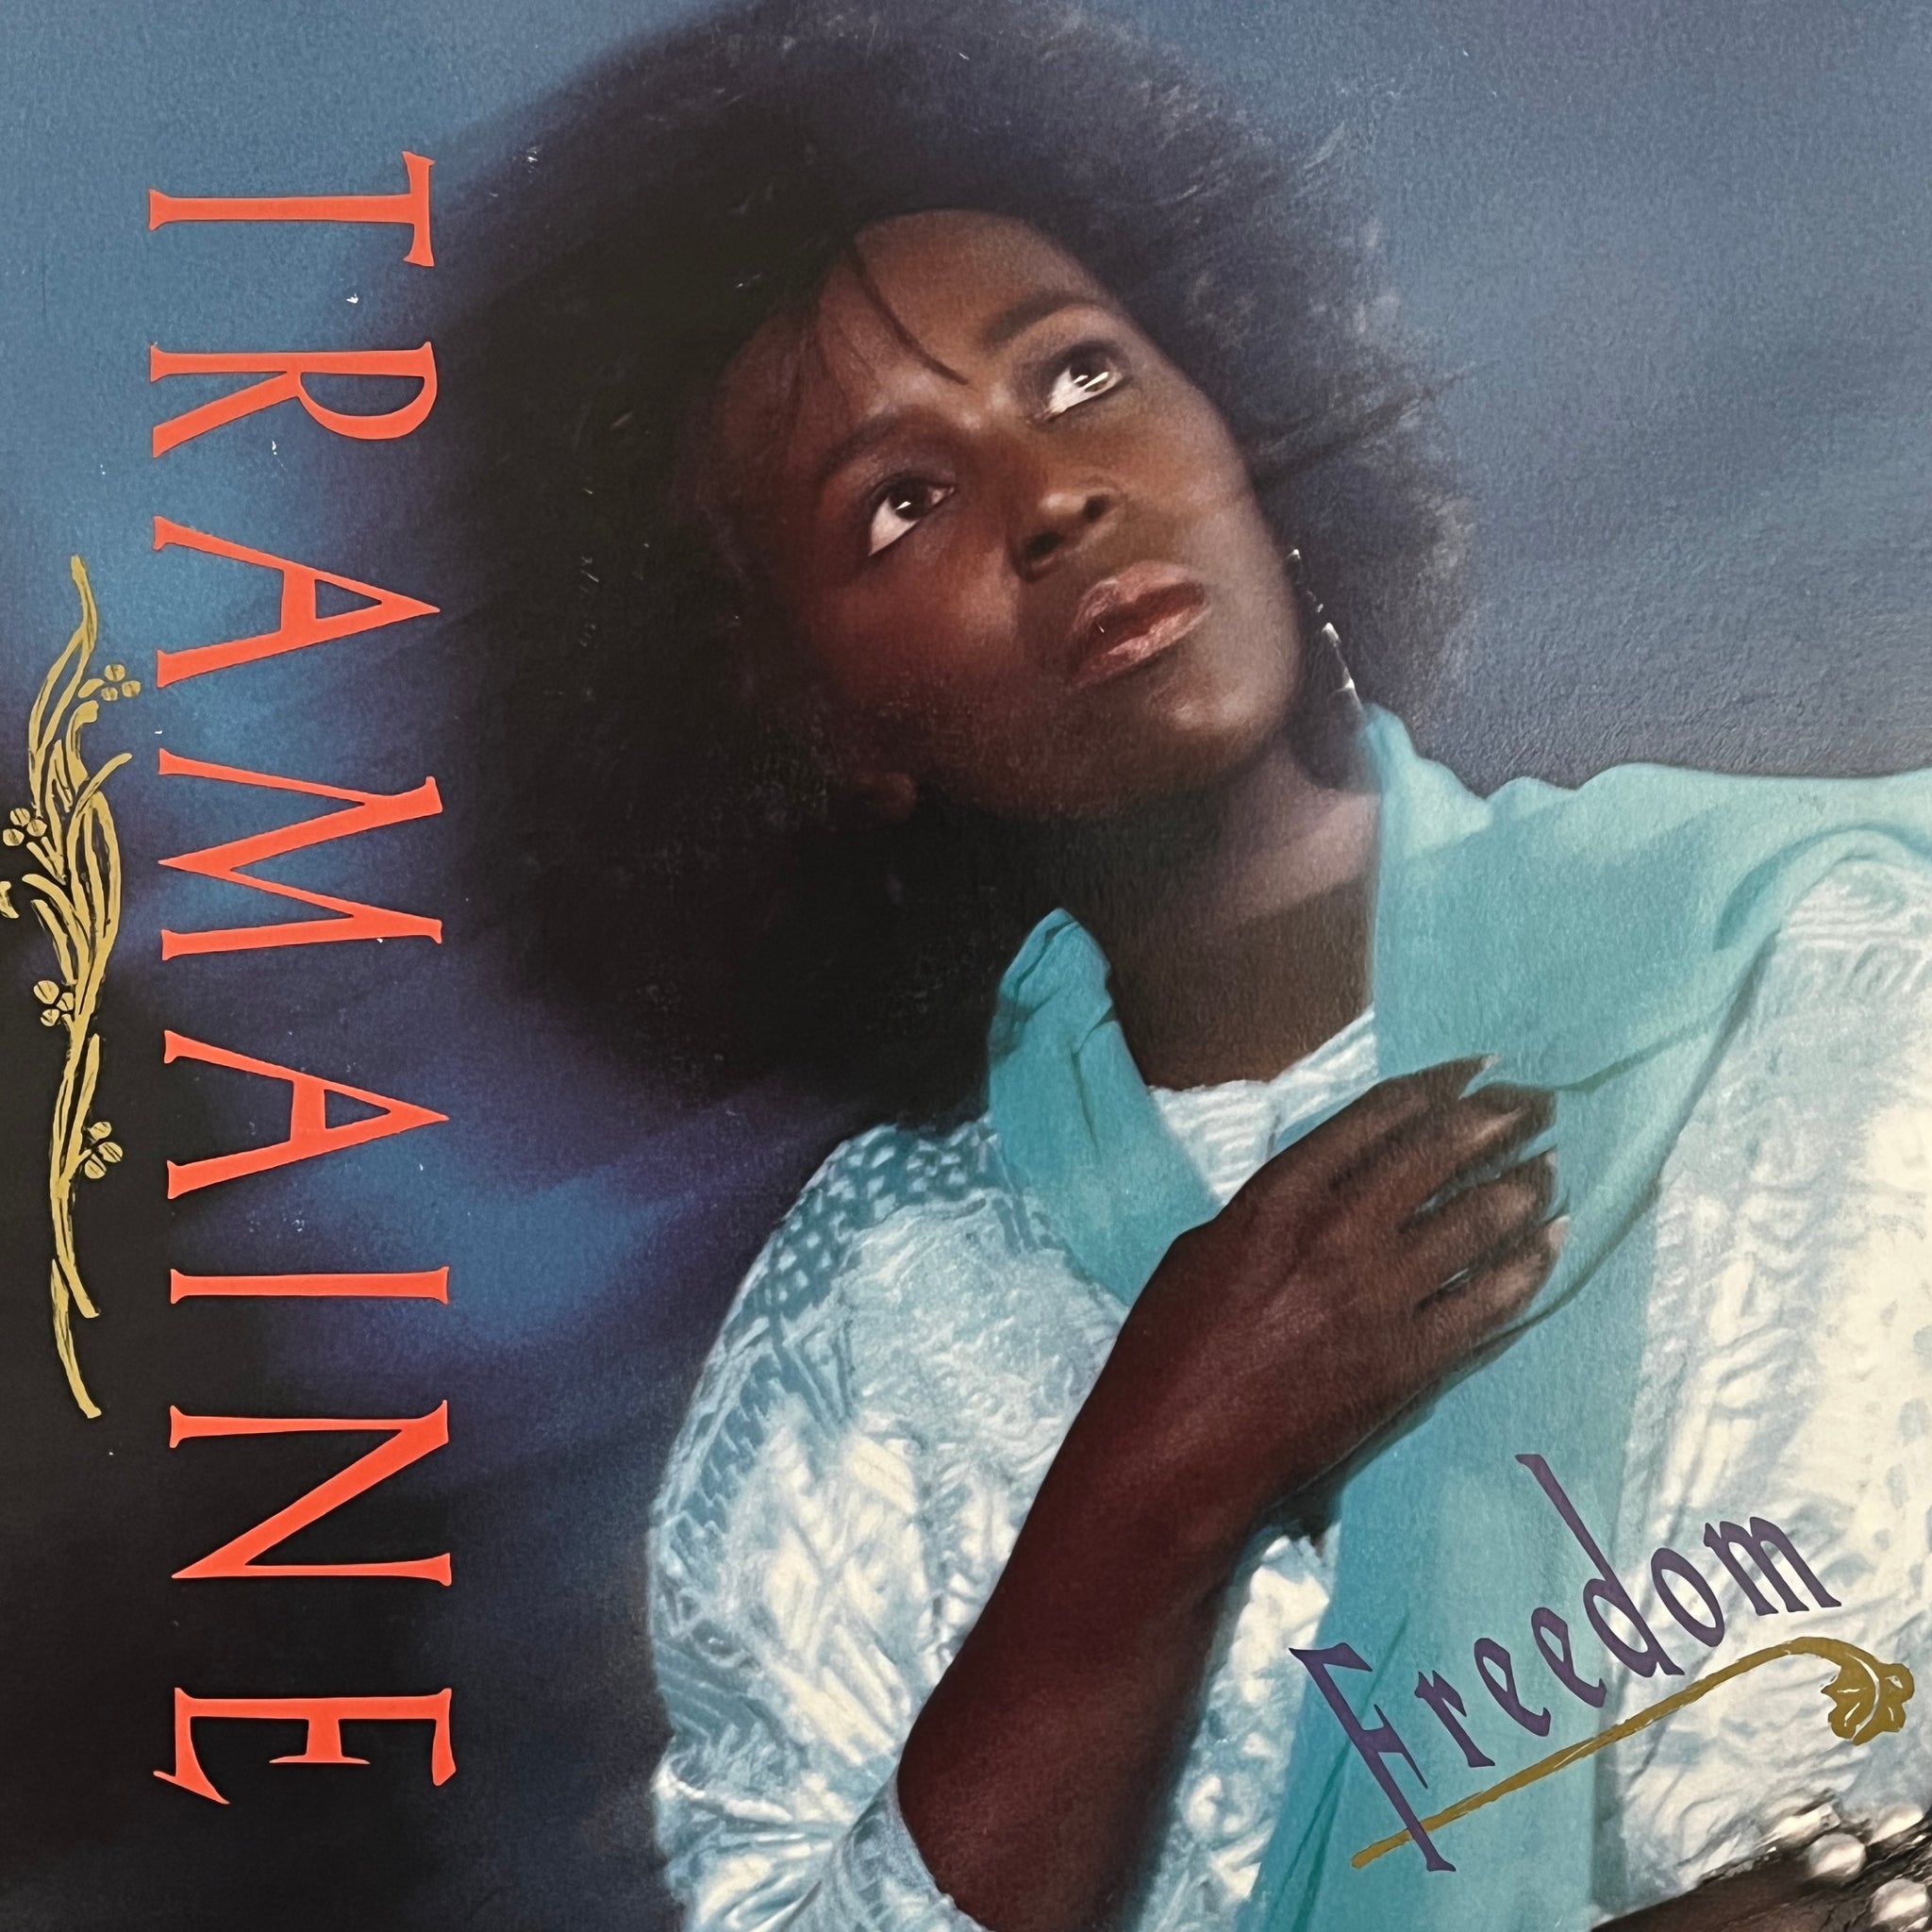 Tramaine – Freedom